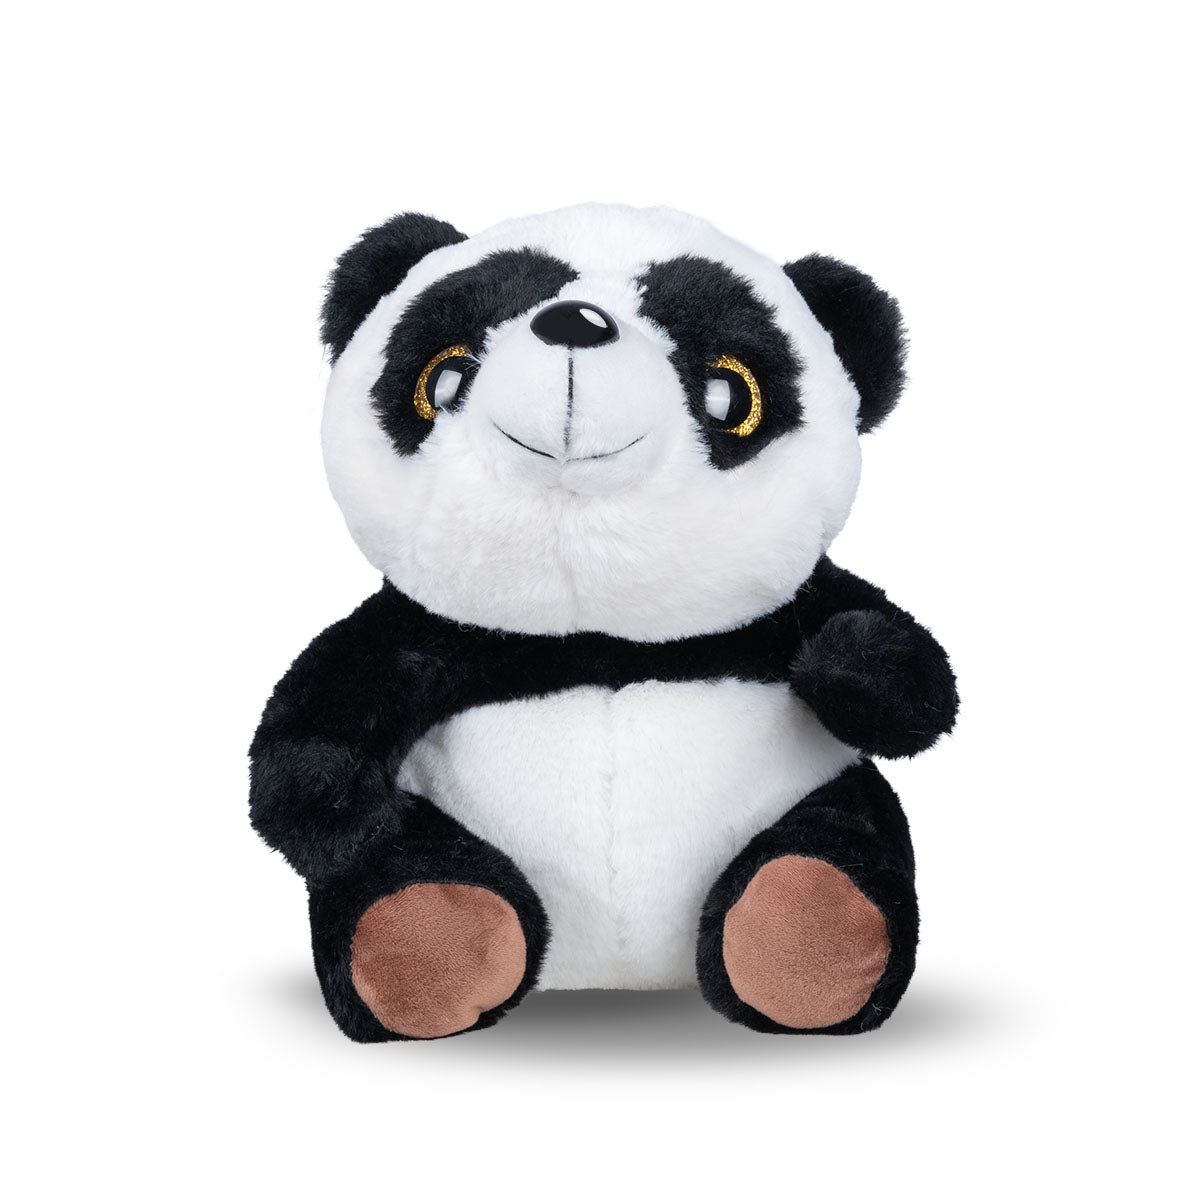 Dryly - bedwetting alarm - Soft toys - Wizzu Panda bear front.